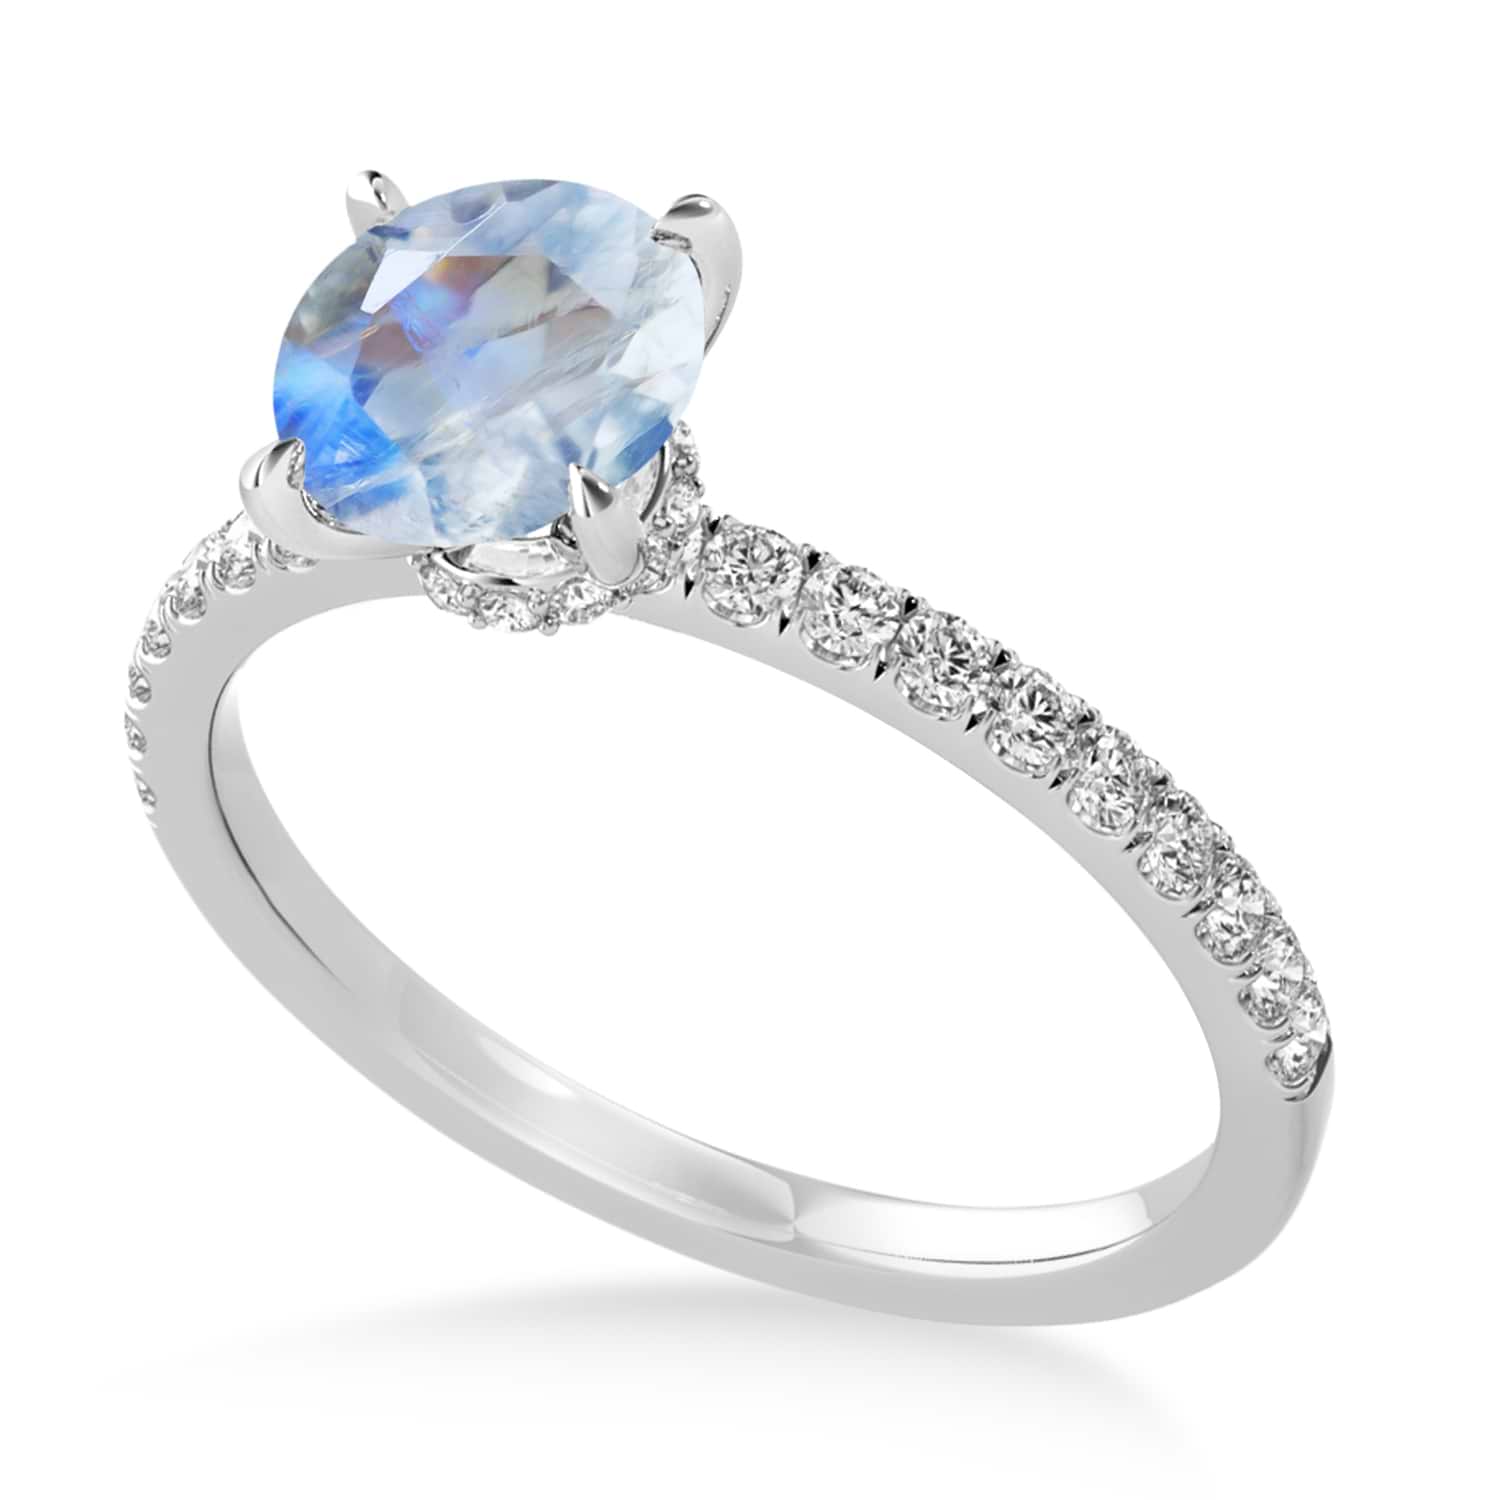 Round Moonstone & Diamond Single Row Hidden Halo Engagement Ring 14k White Gold (1.25ct)